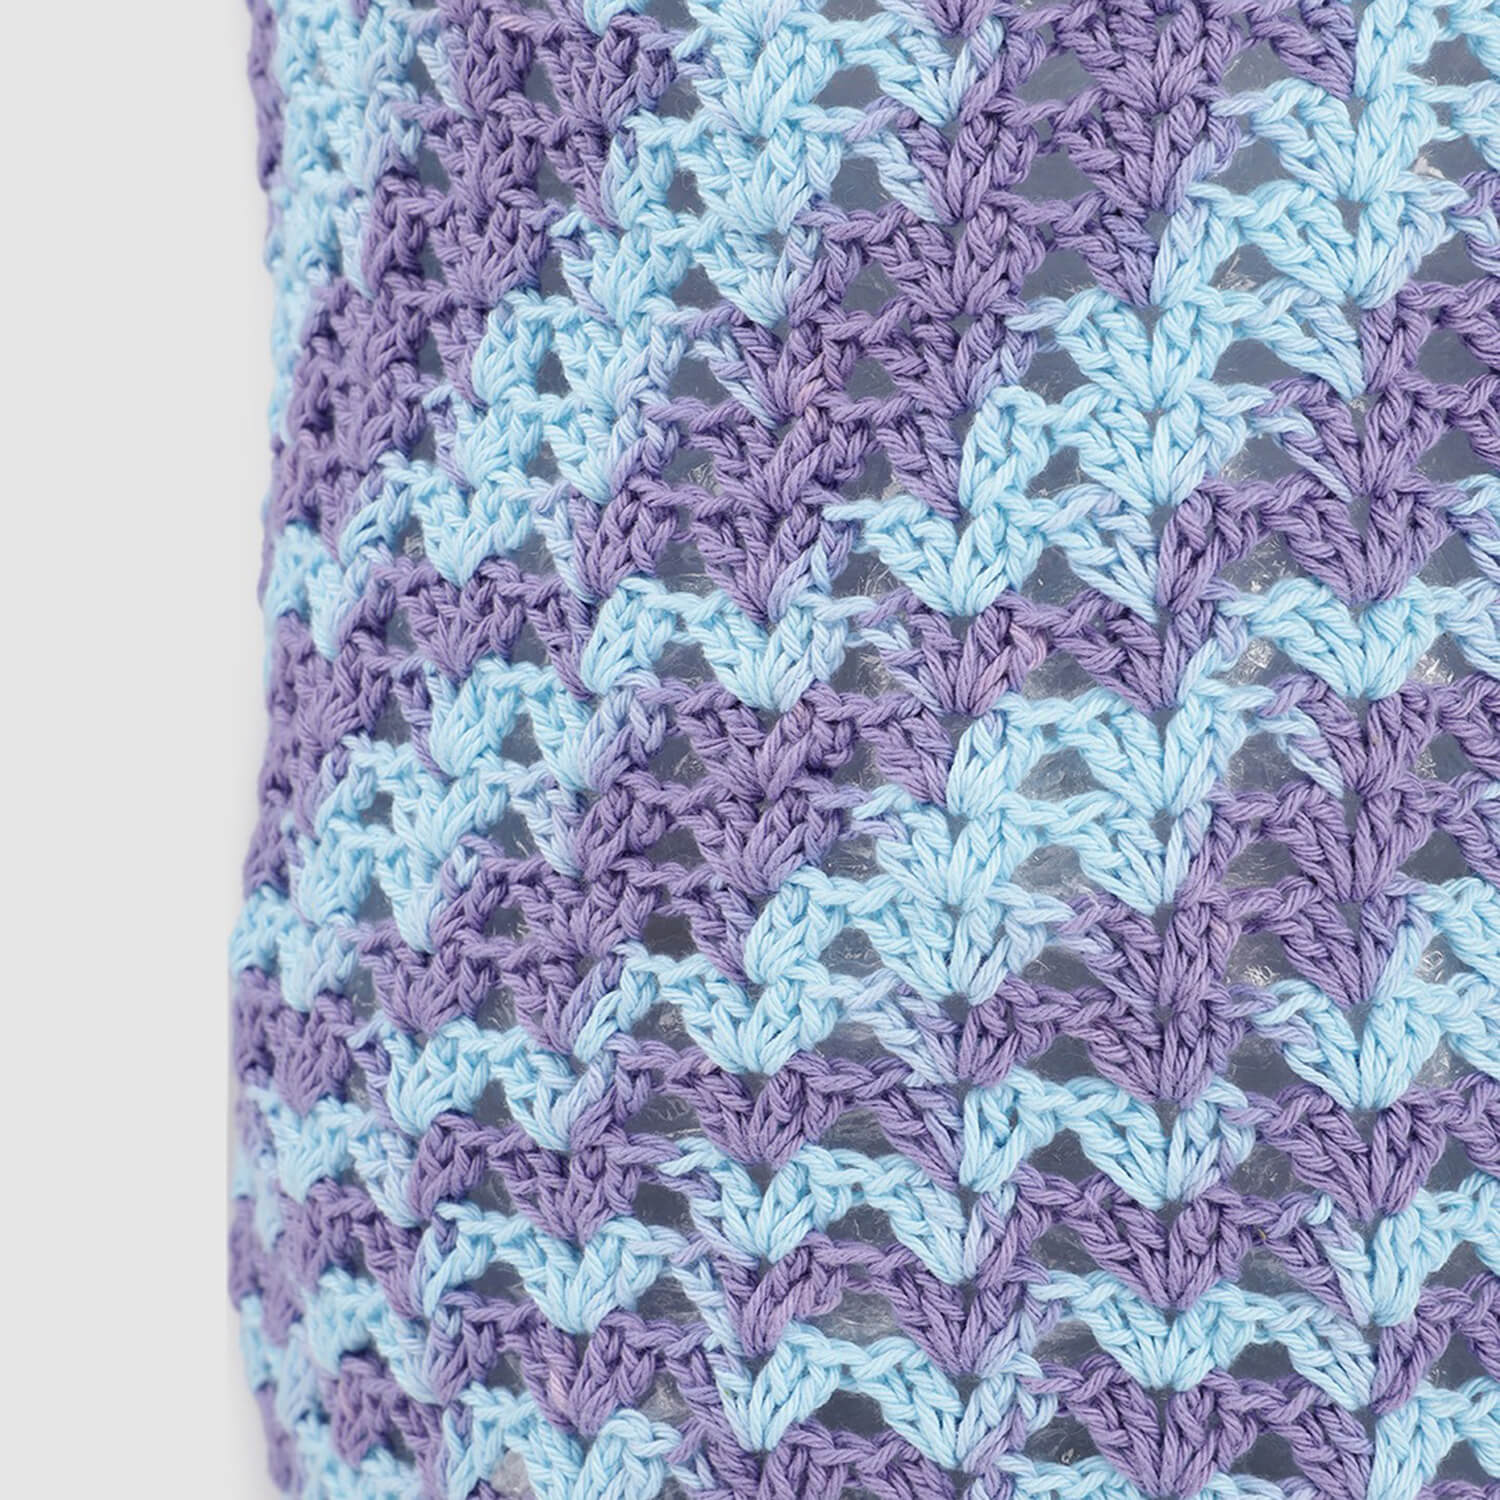 Handmade Crochet Market Bag - Blue, Purple 2646